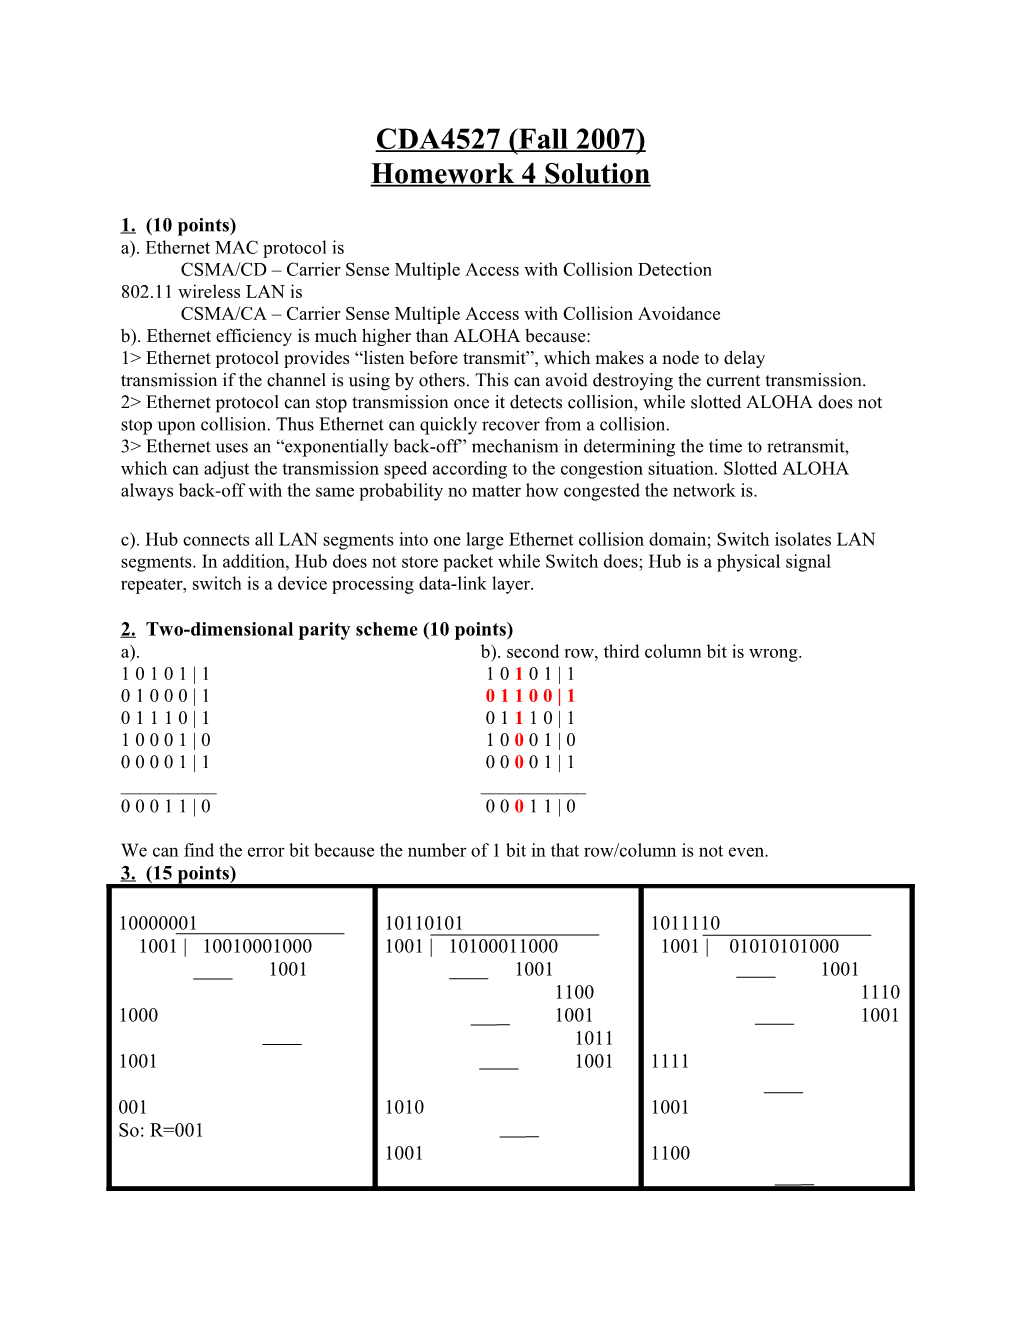 Homework 4 Solution